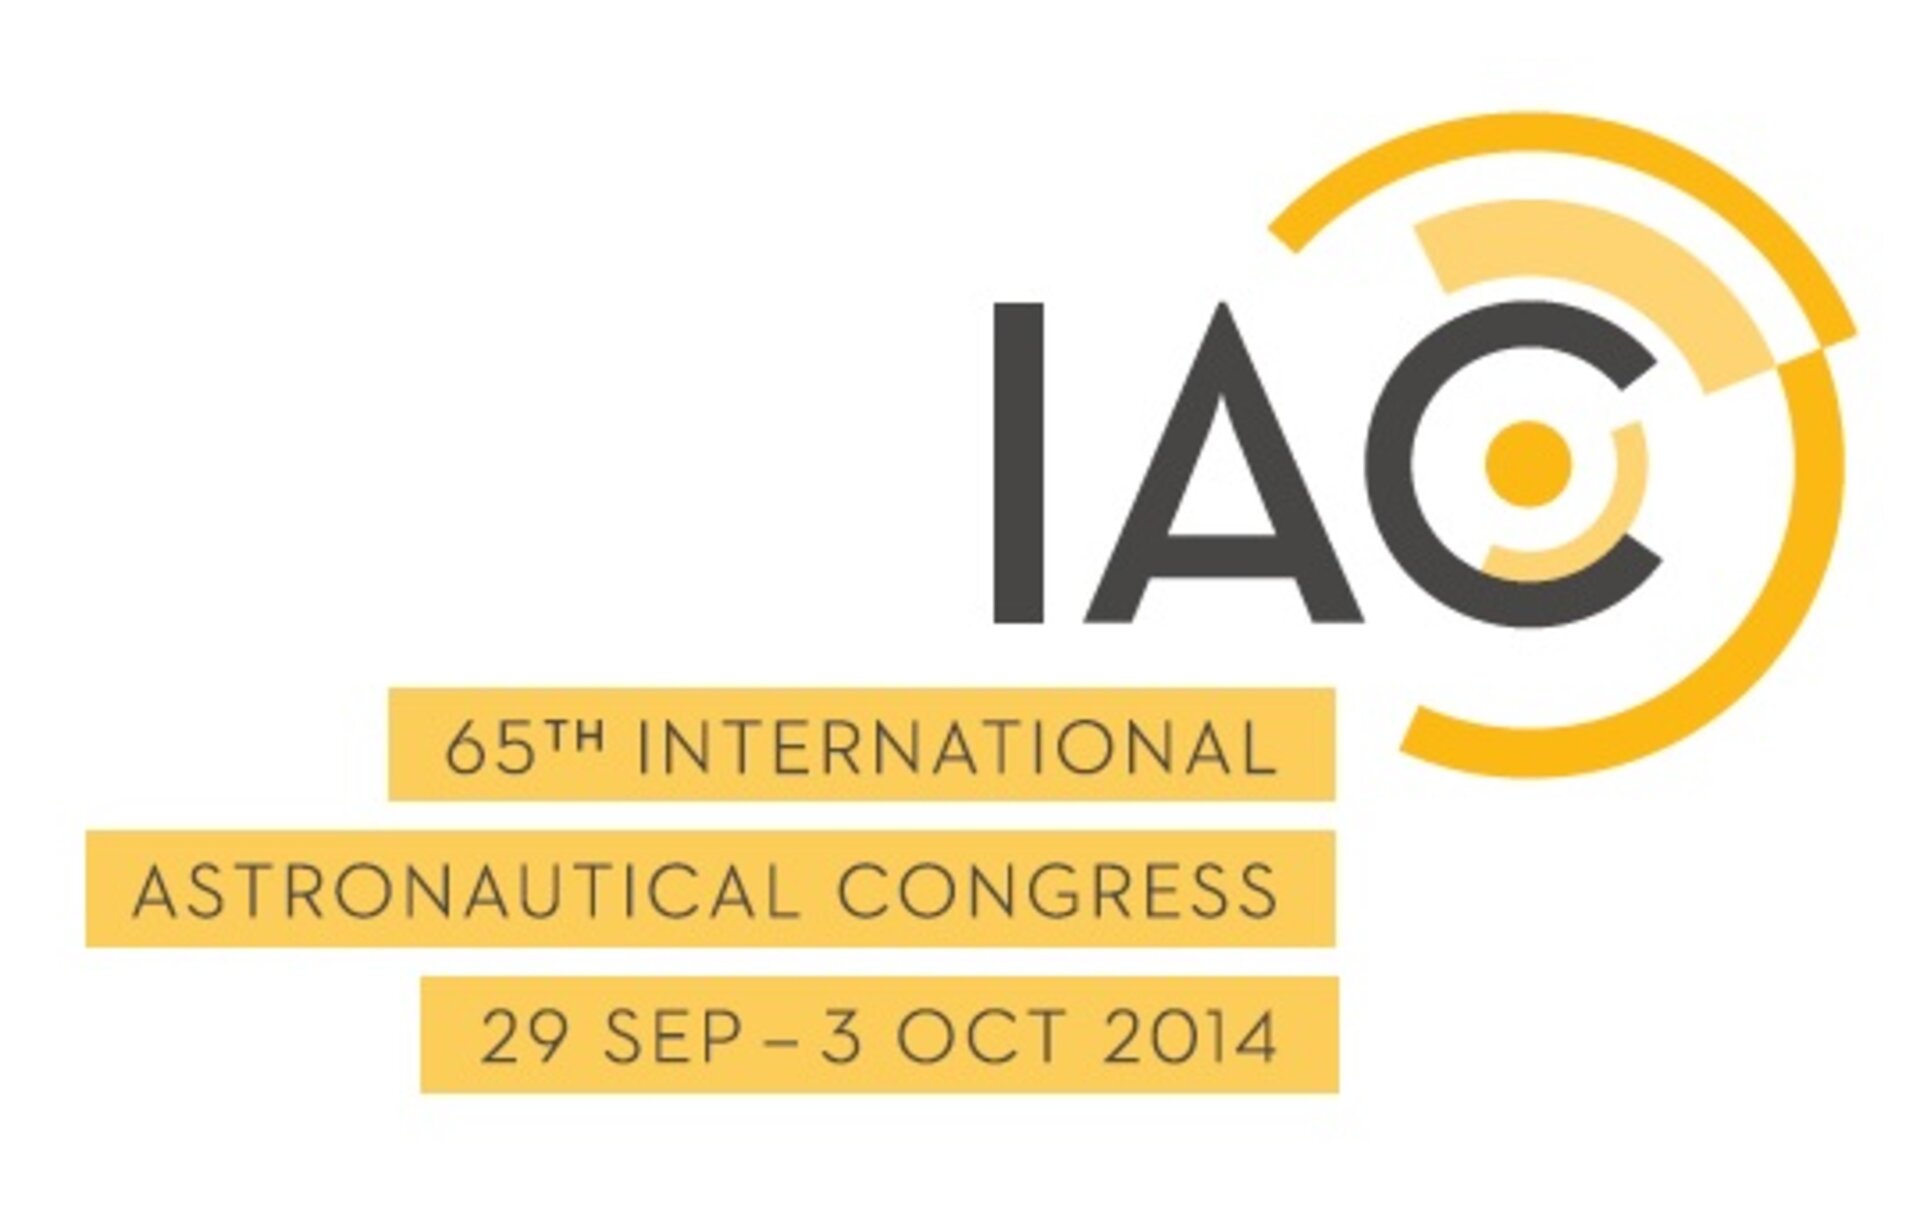 The IAC 2014 logo